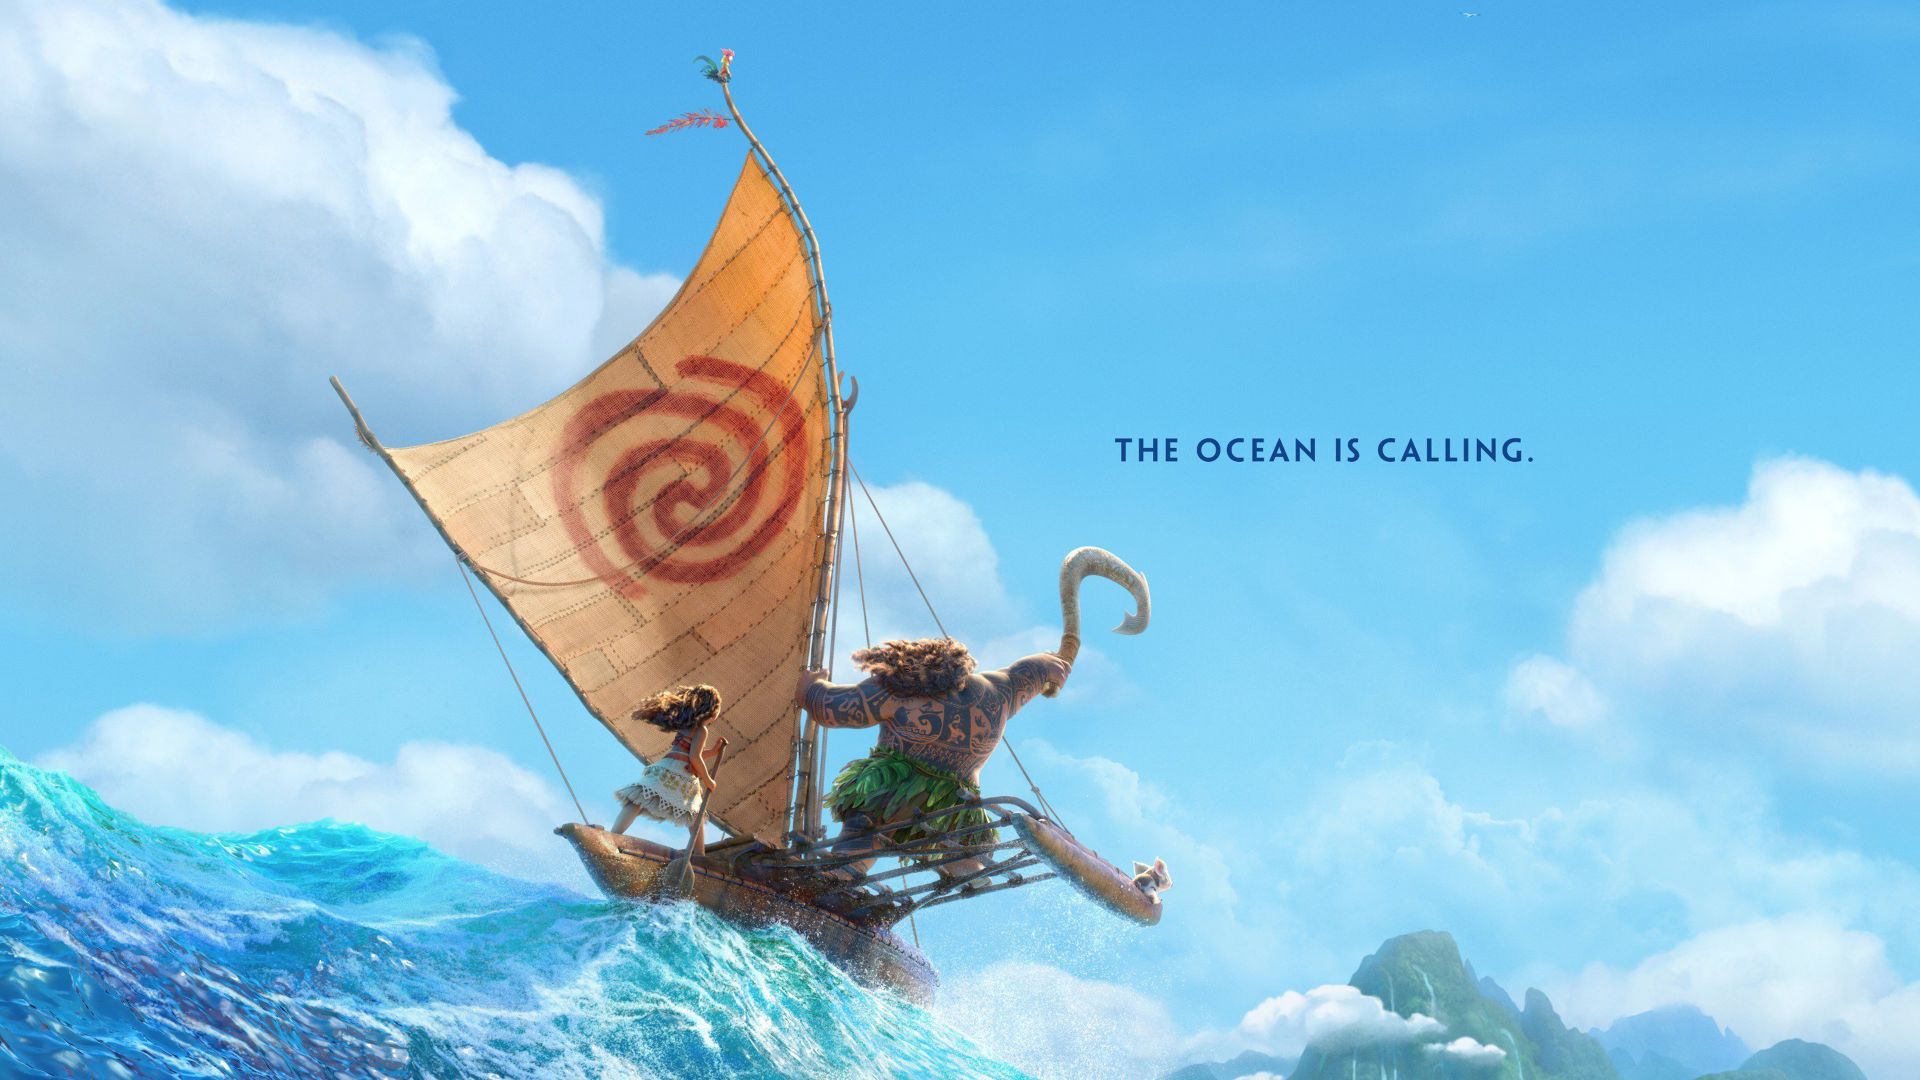 Моана, Мауи, океан, лучшие мультфильмы 2016, Moana, Maui, ocean, best animation movies of 2016 (horizontal)